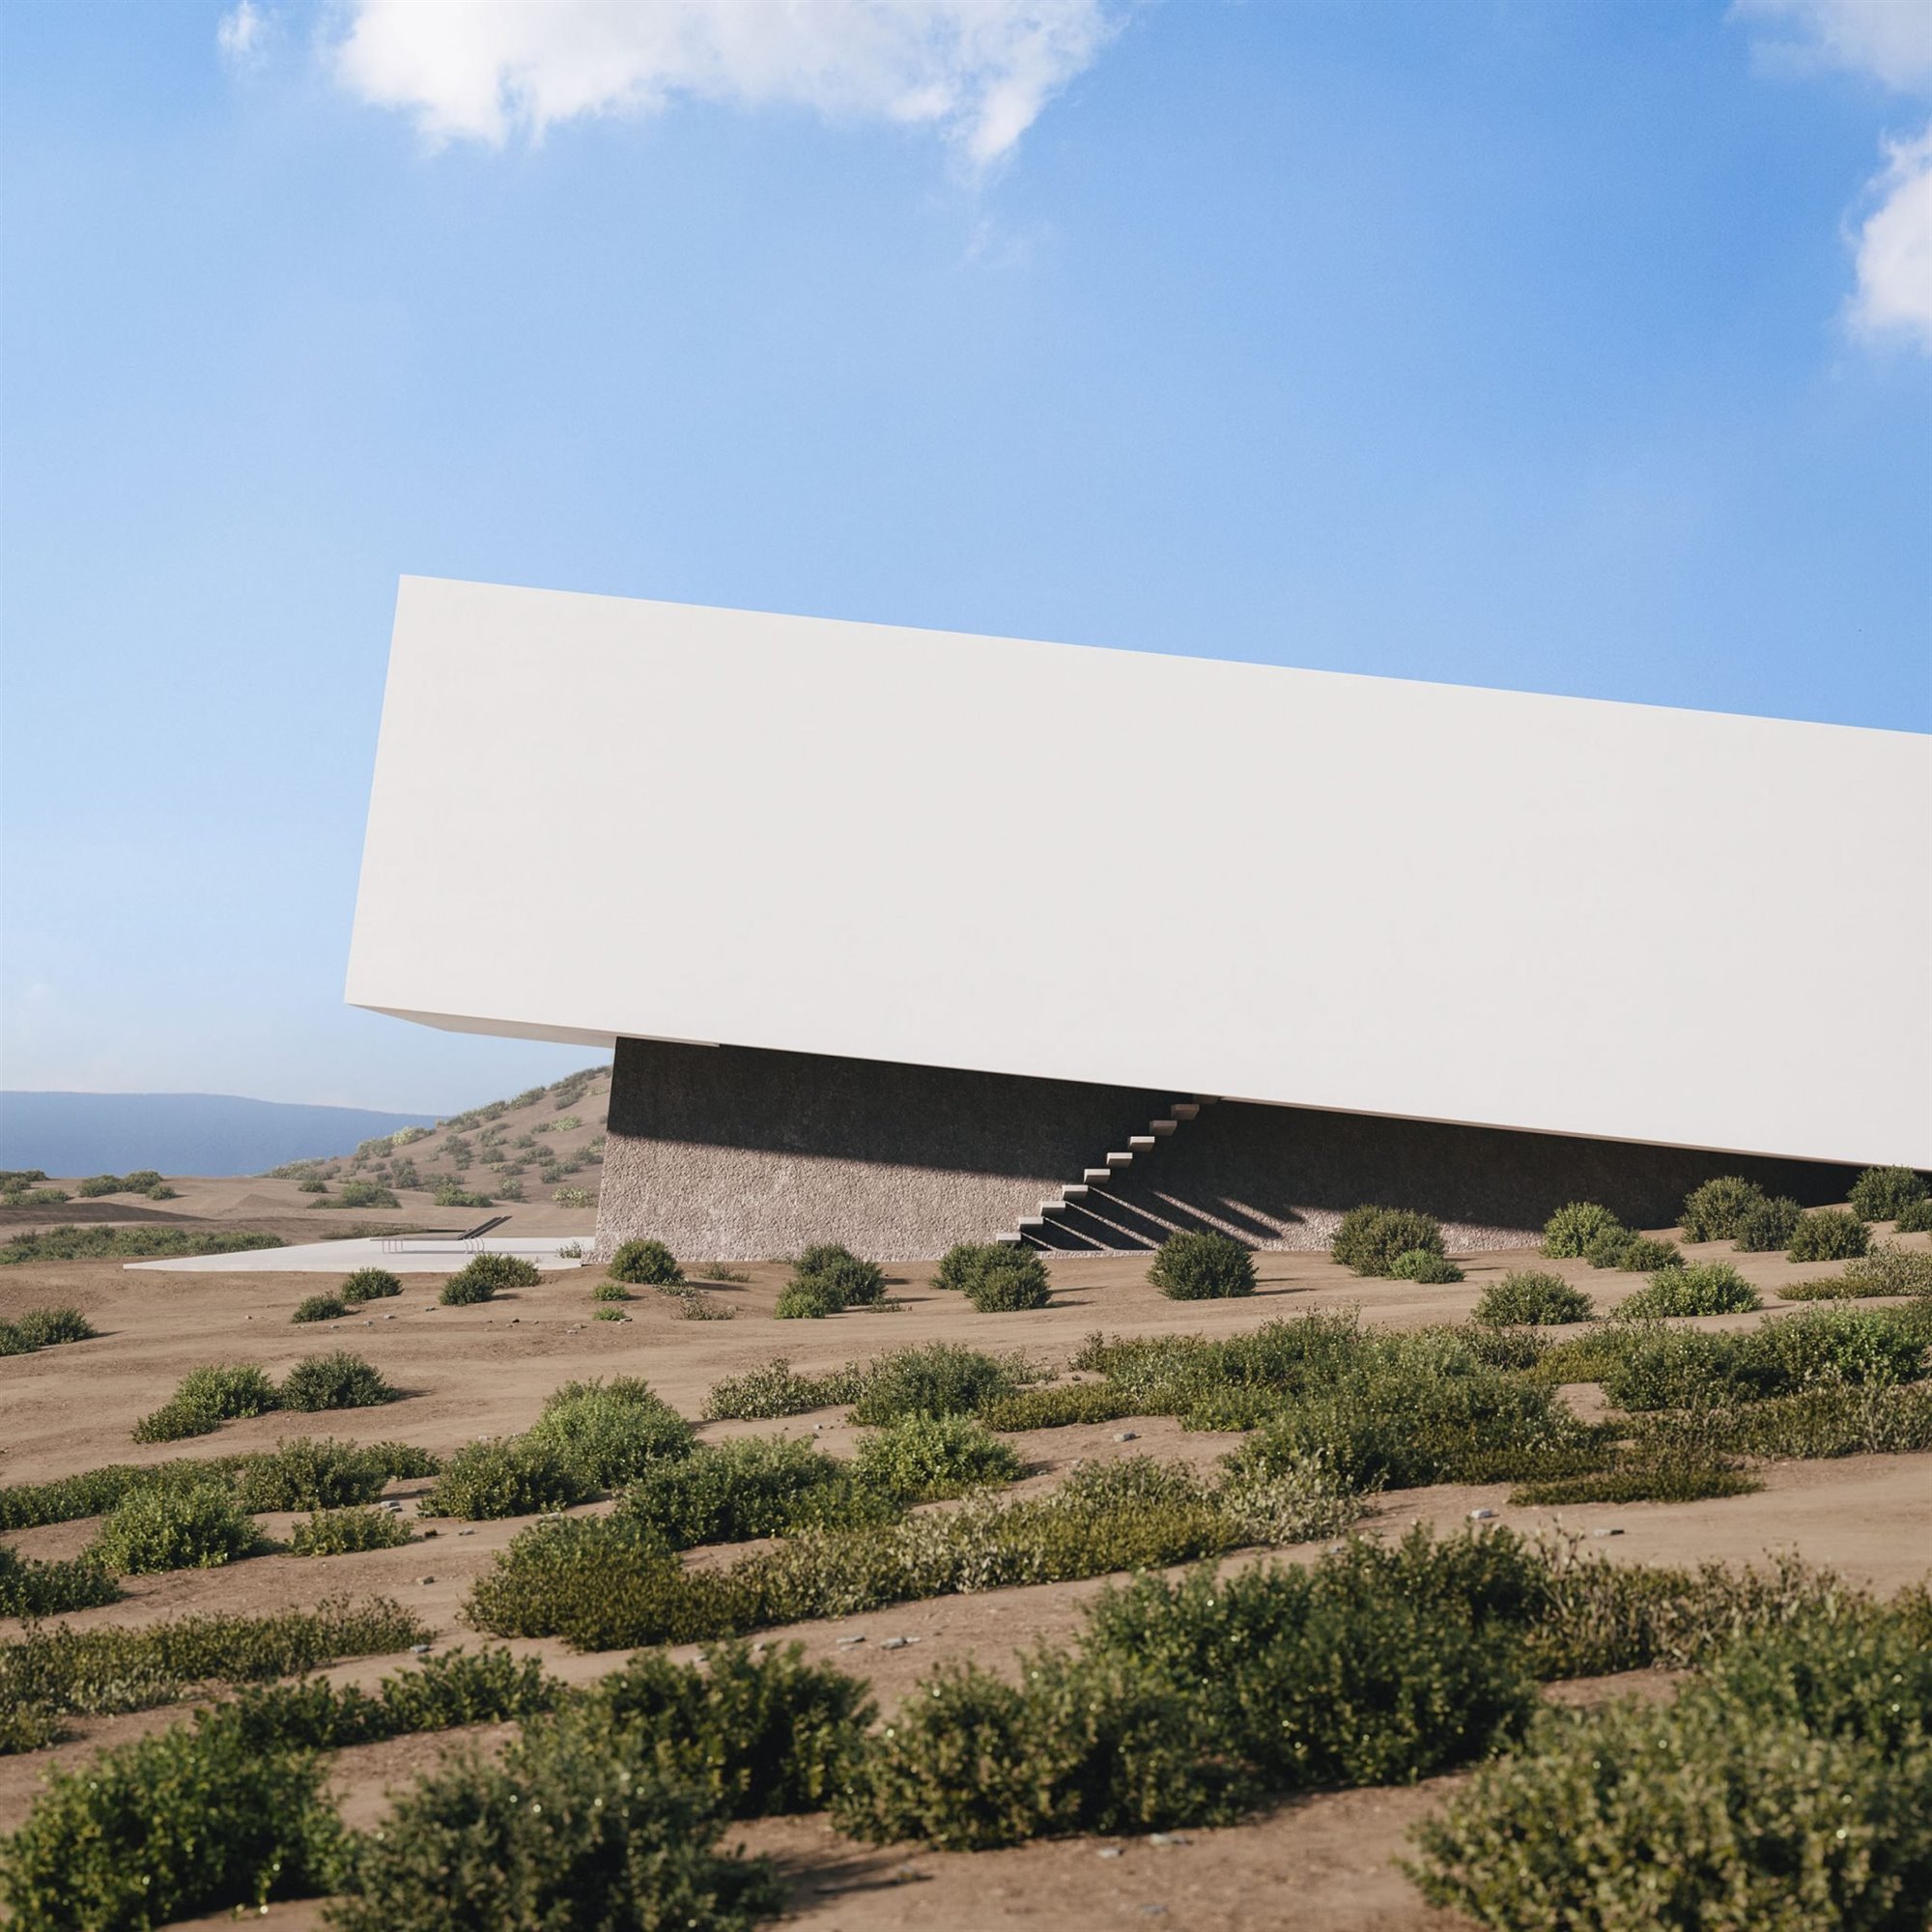 Casa de arquitectura moderna en grecia de color blanco fachada inclinada